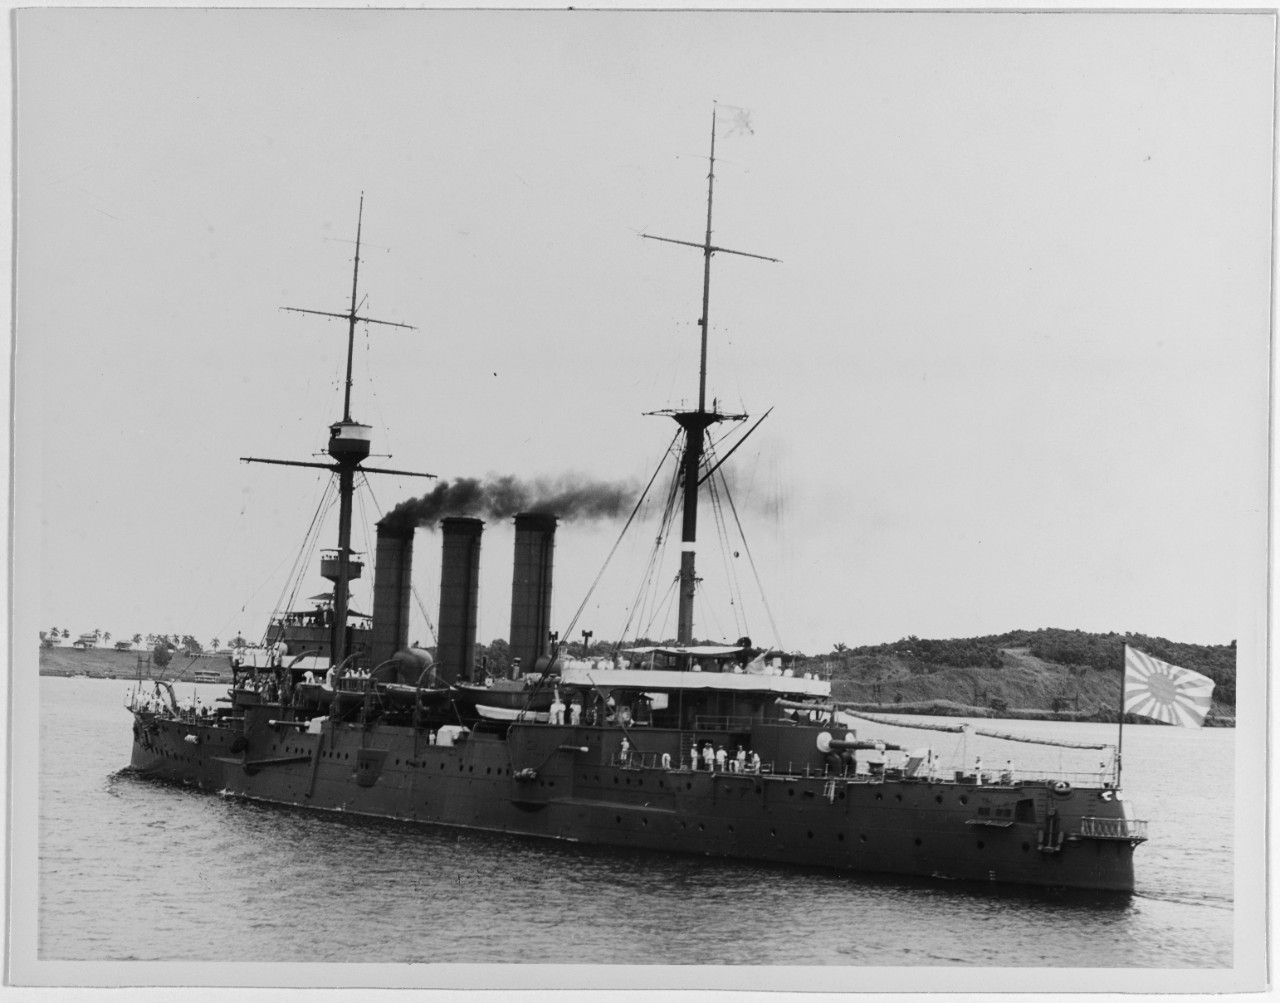 IWATE (Japanese armored cruiser, 1900)